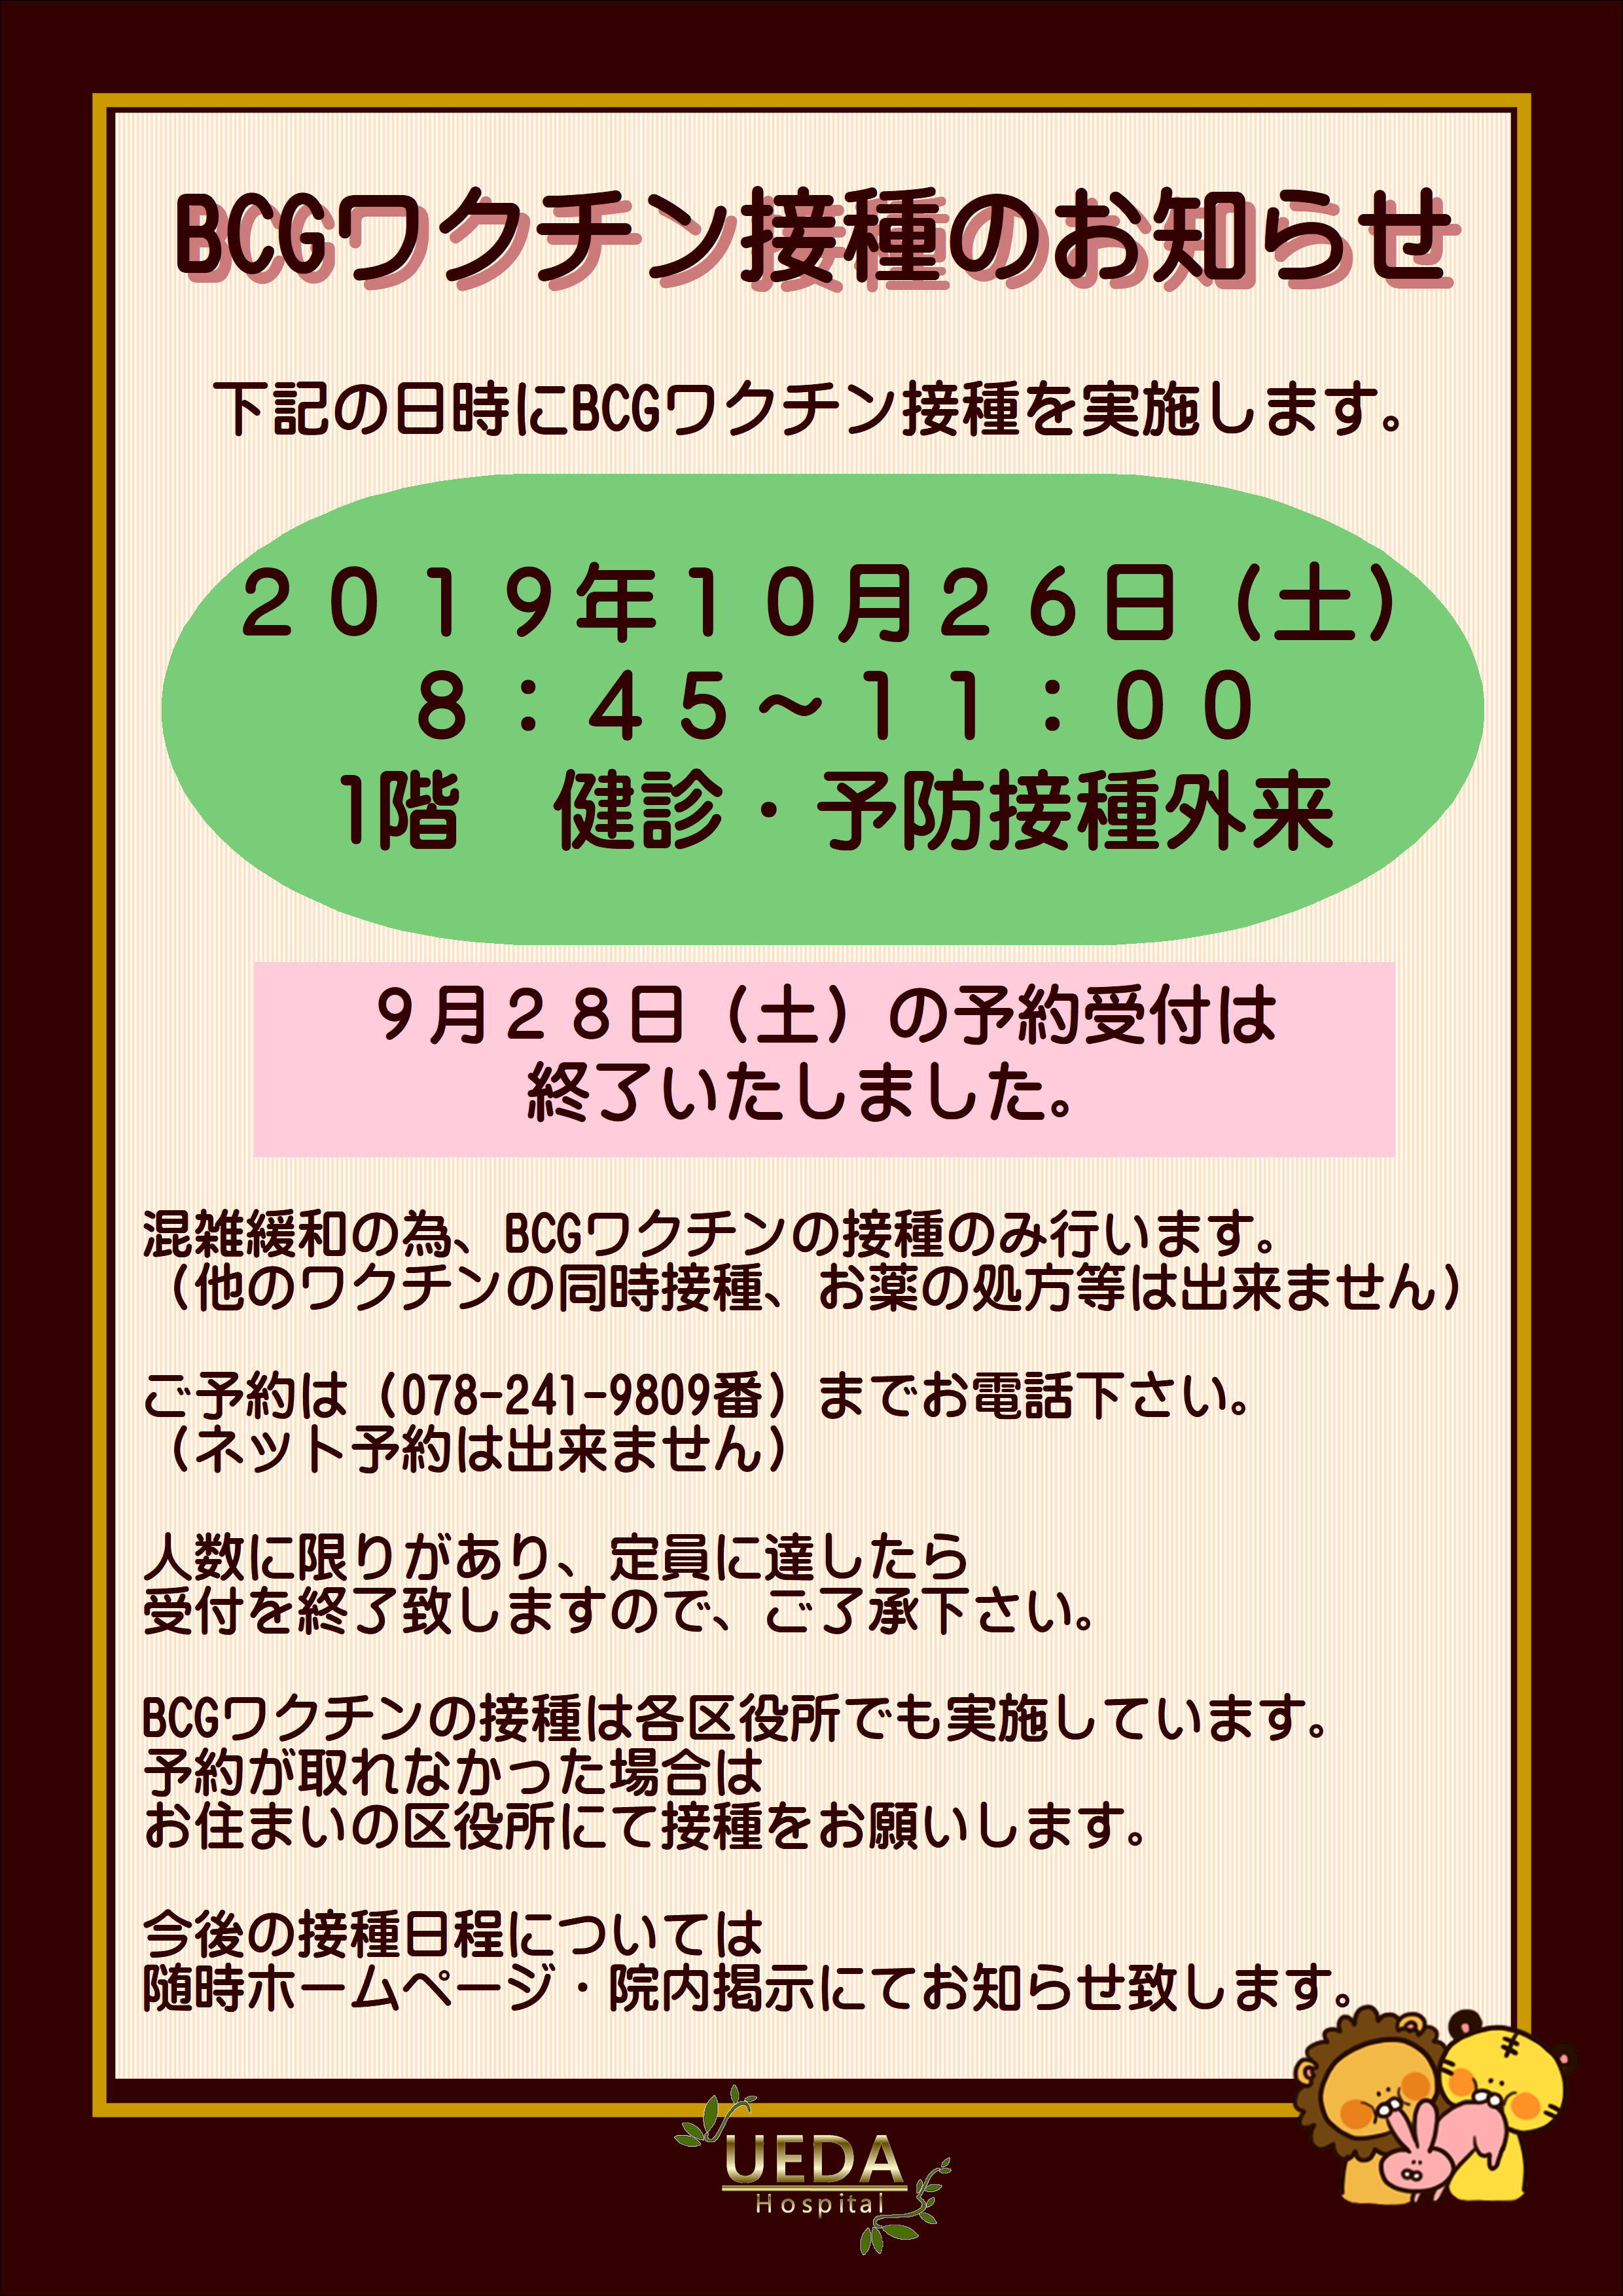 https://ueda-hp.jp/news/2019/09/upload/daefeab62e685da0b48cdbeb0ed68a861bd6df8a.jpg